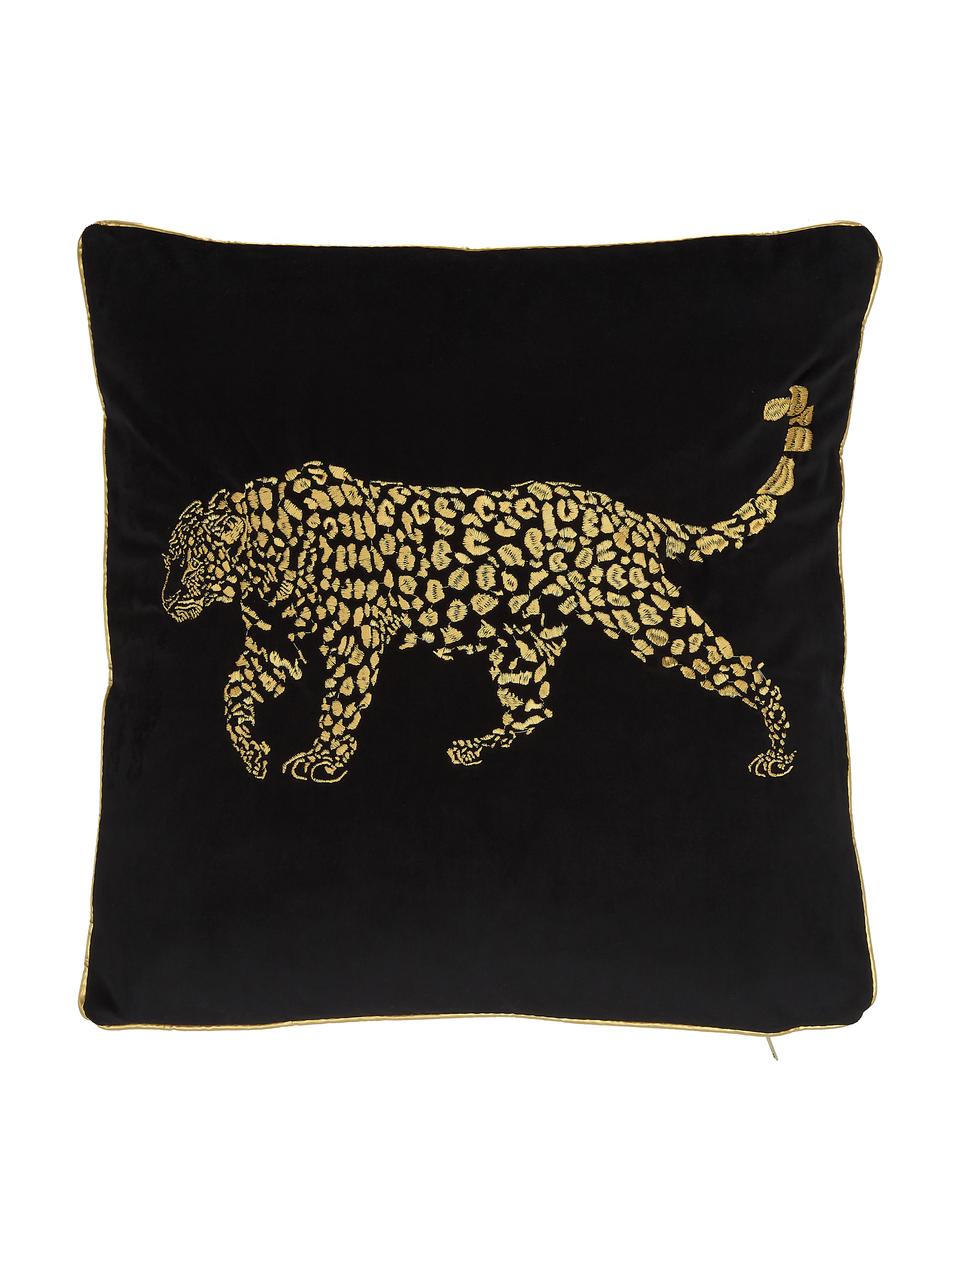 Cojín bordado de terciopelo Majestic Leopard, con relleno, 100% terciopelo (poliéster), Negro, dorado, An 45 x L 45 cm